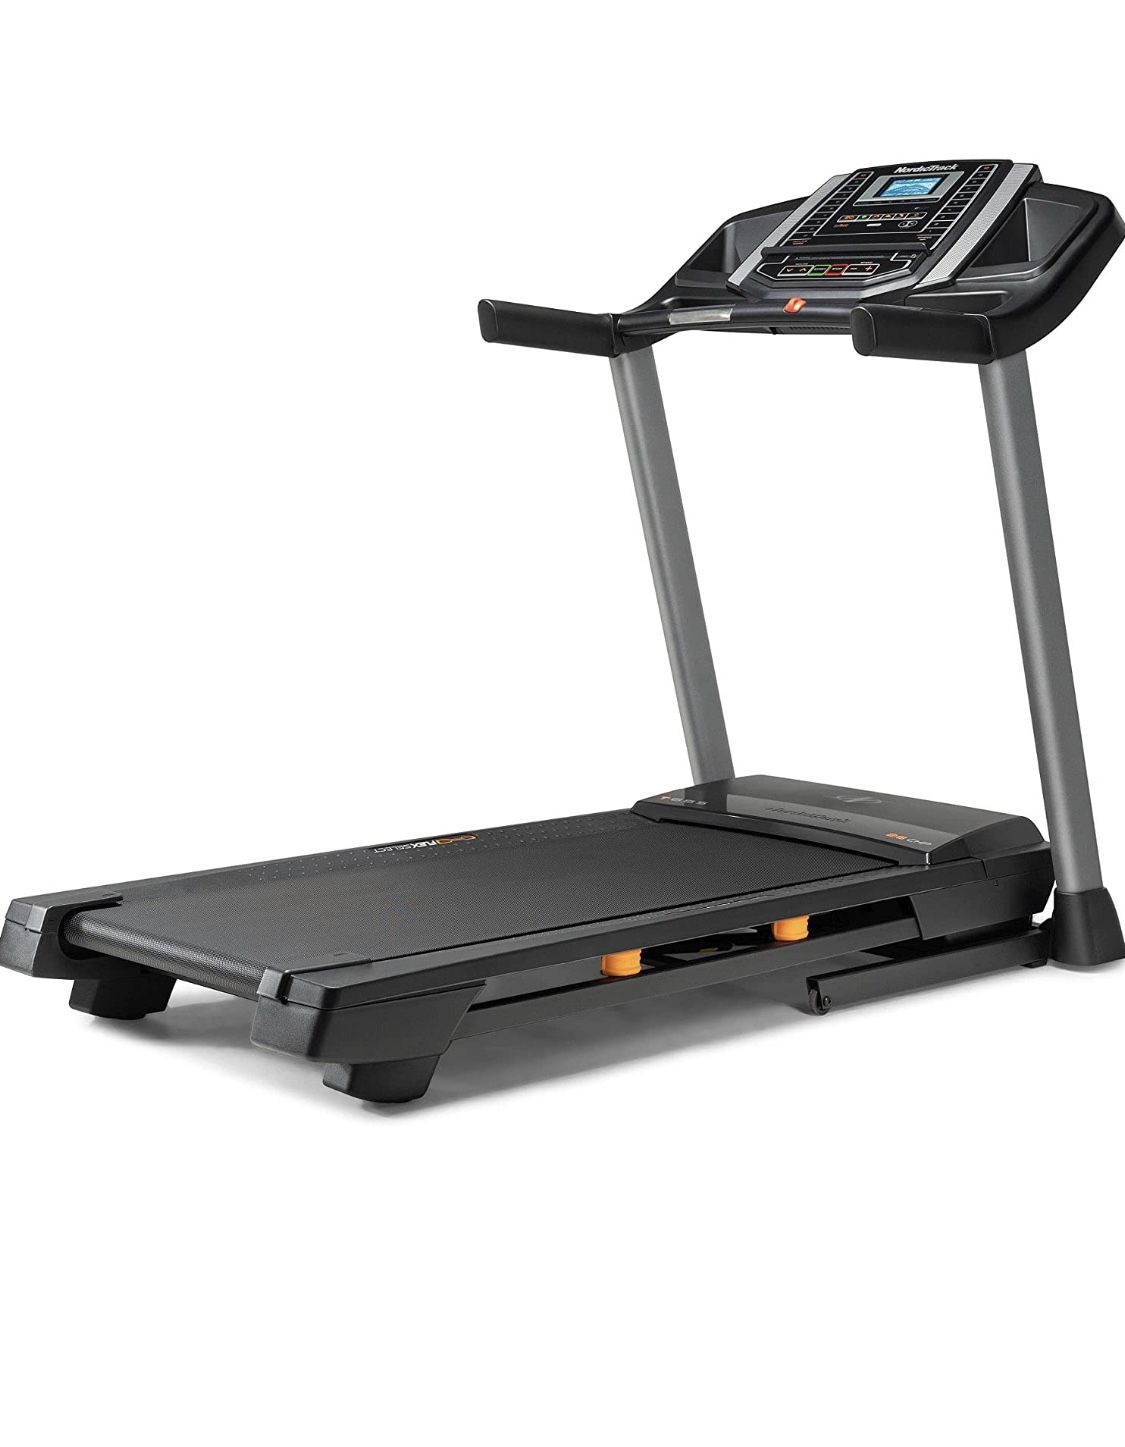 NordicTrack Treadmill T6.5S